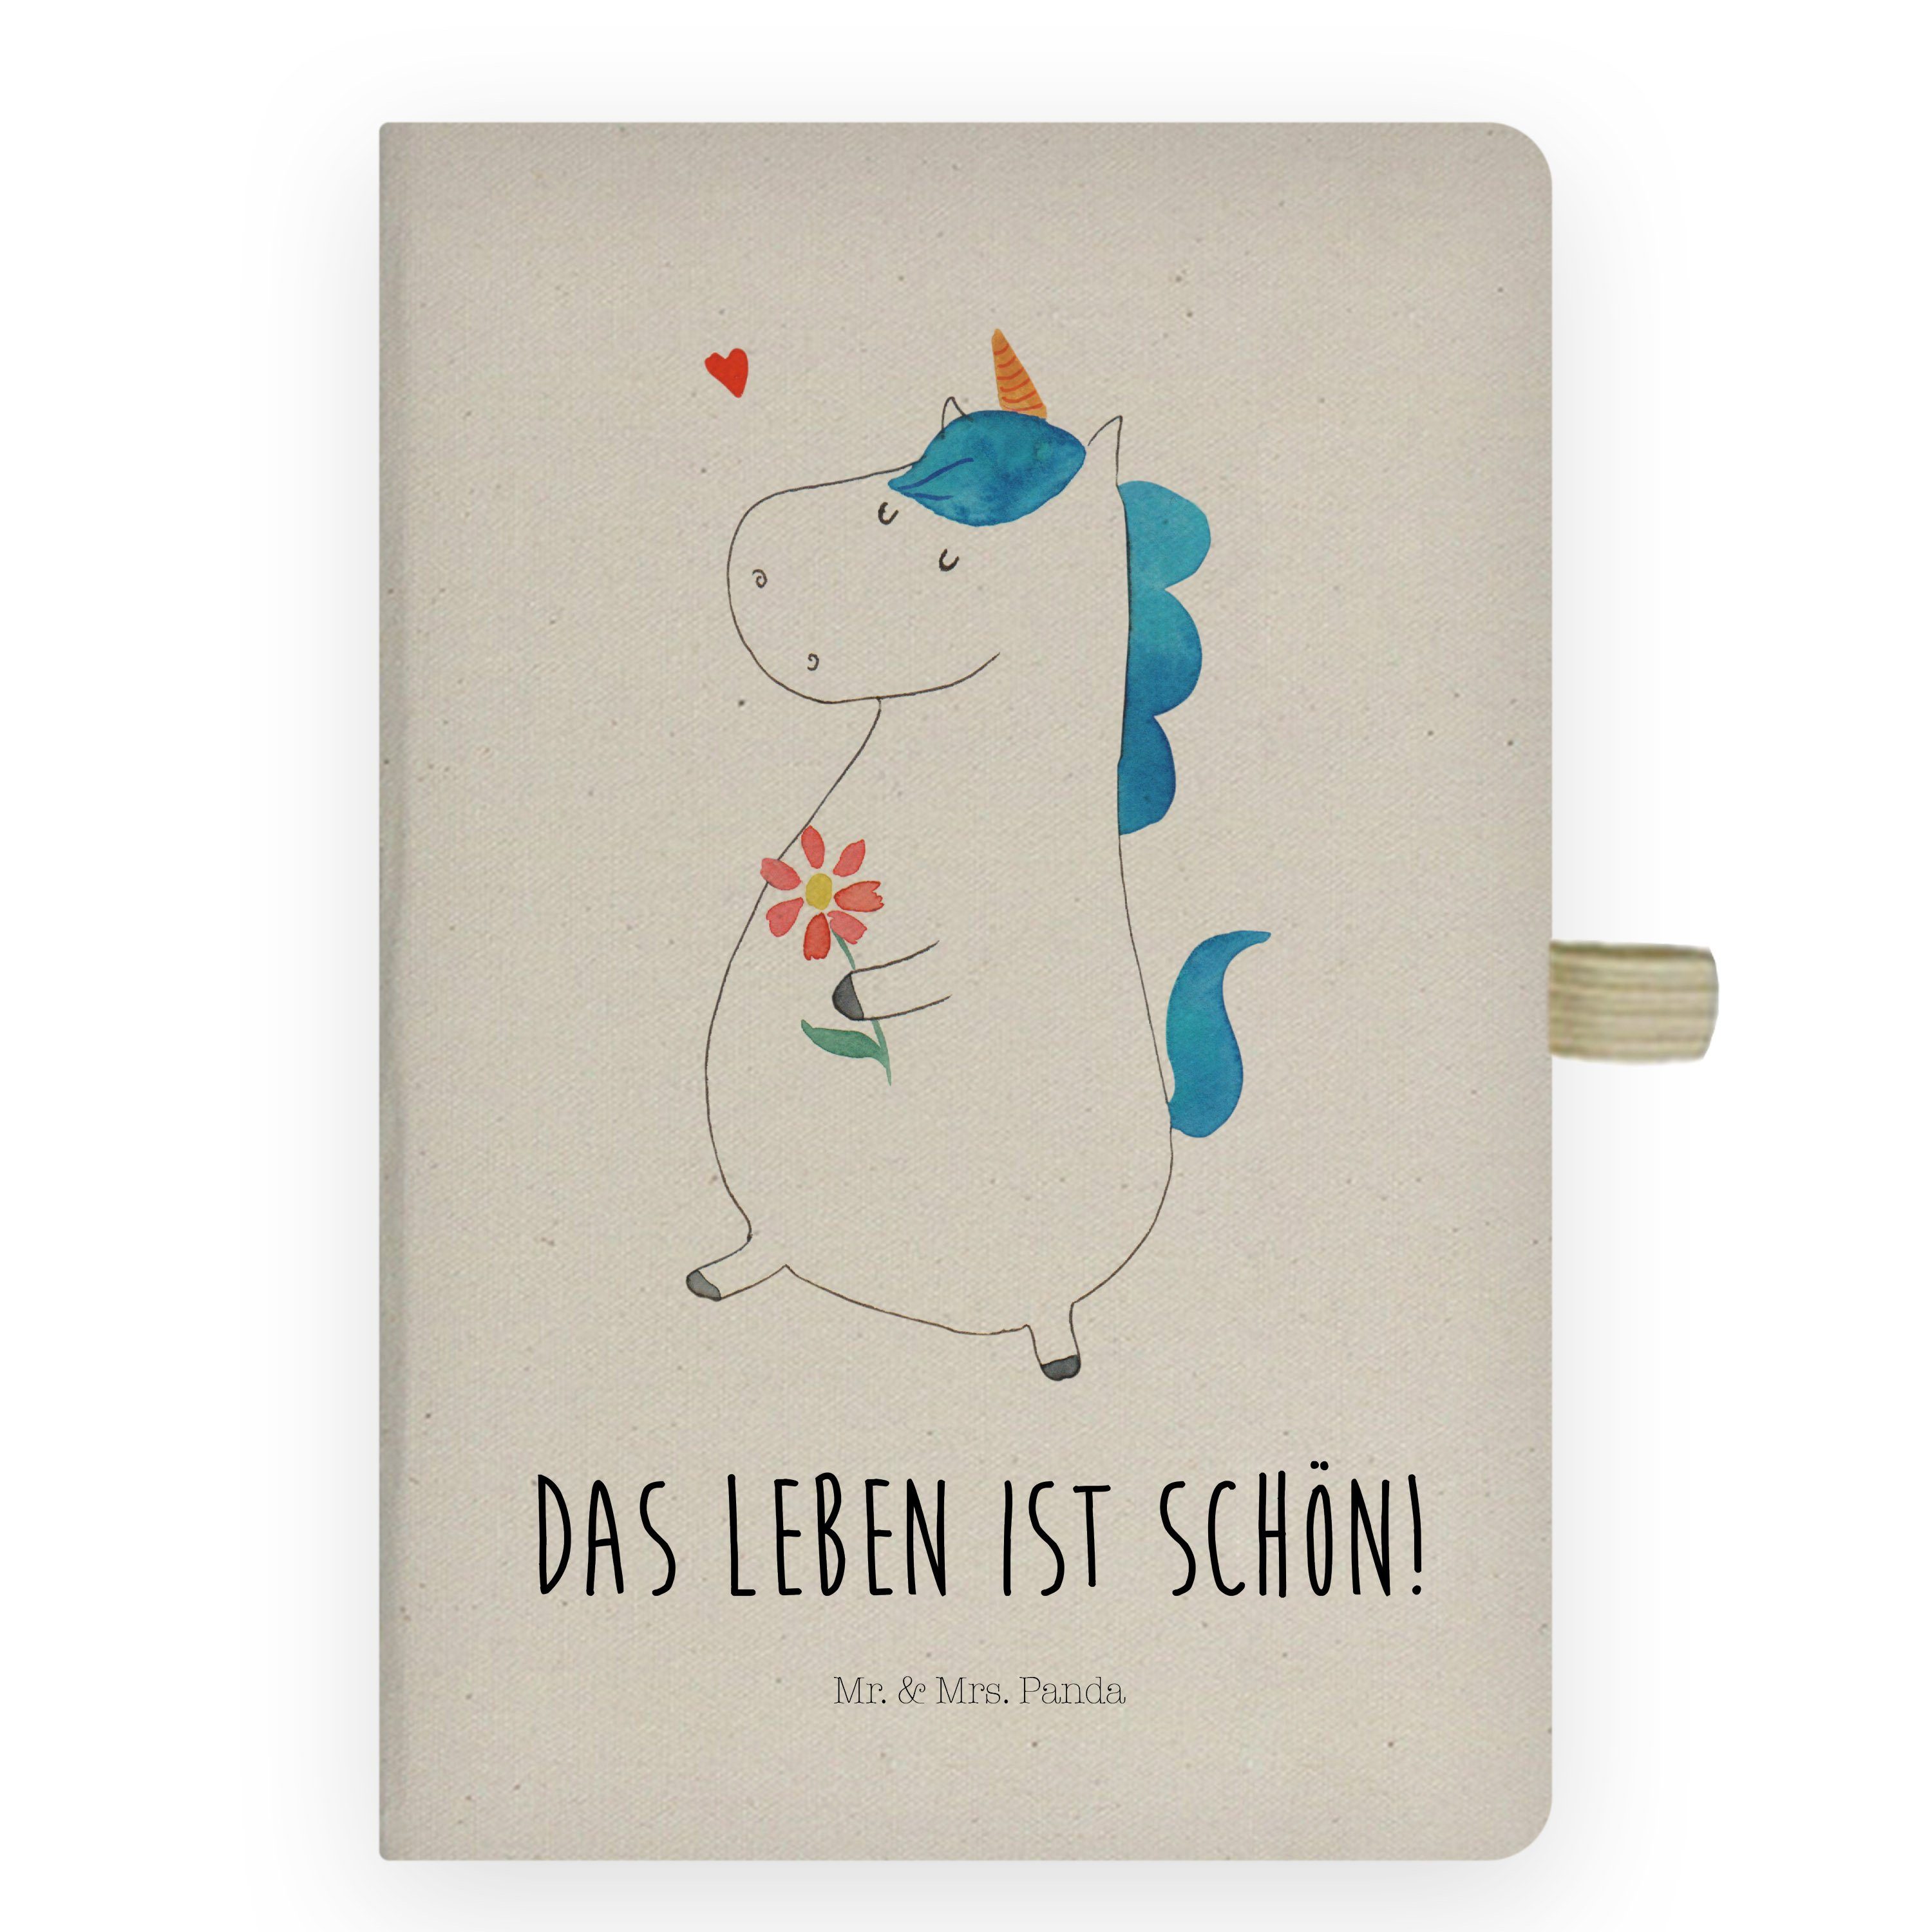 & - Geschenk, Spaziergang & Einhorn Panda Schreibbuch, Mrs. G Transparent Panda - Mr. Mrs. Mr. Glitzer, Notizbuch